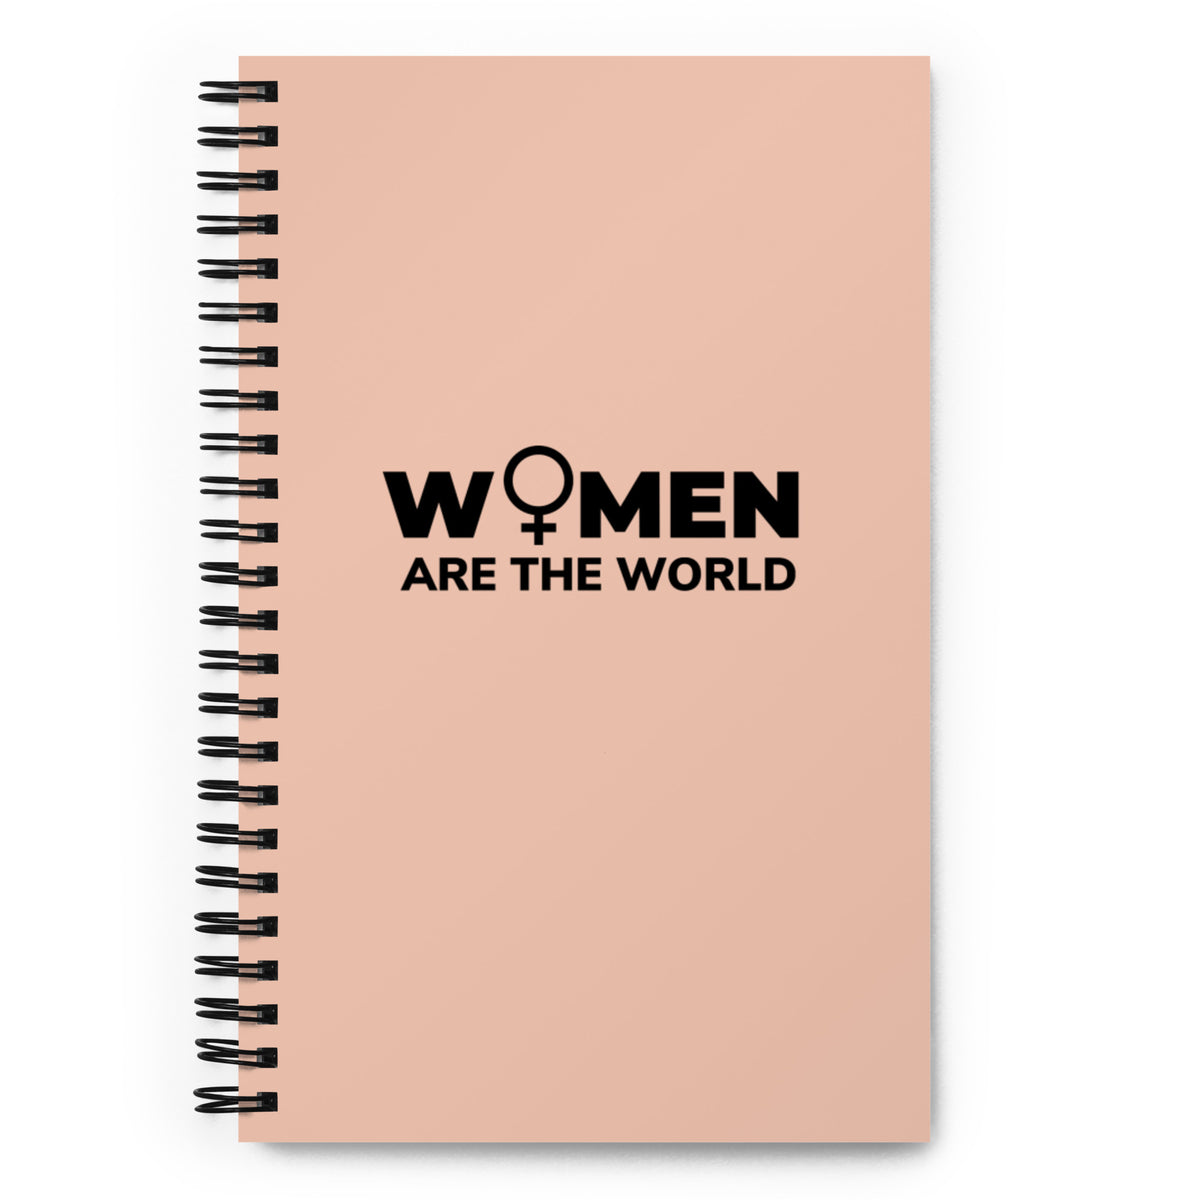 WOMEN are the WORLD Spiral notebook